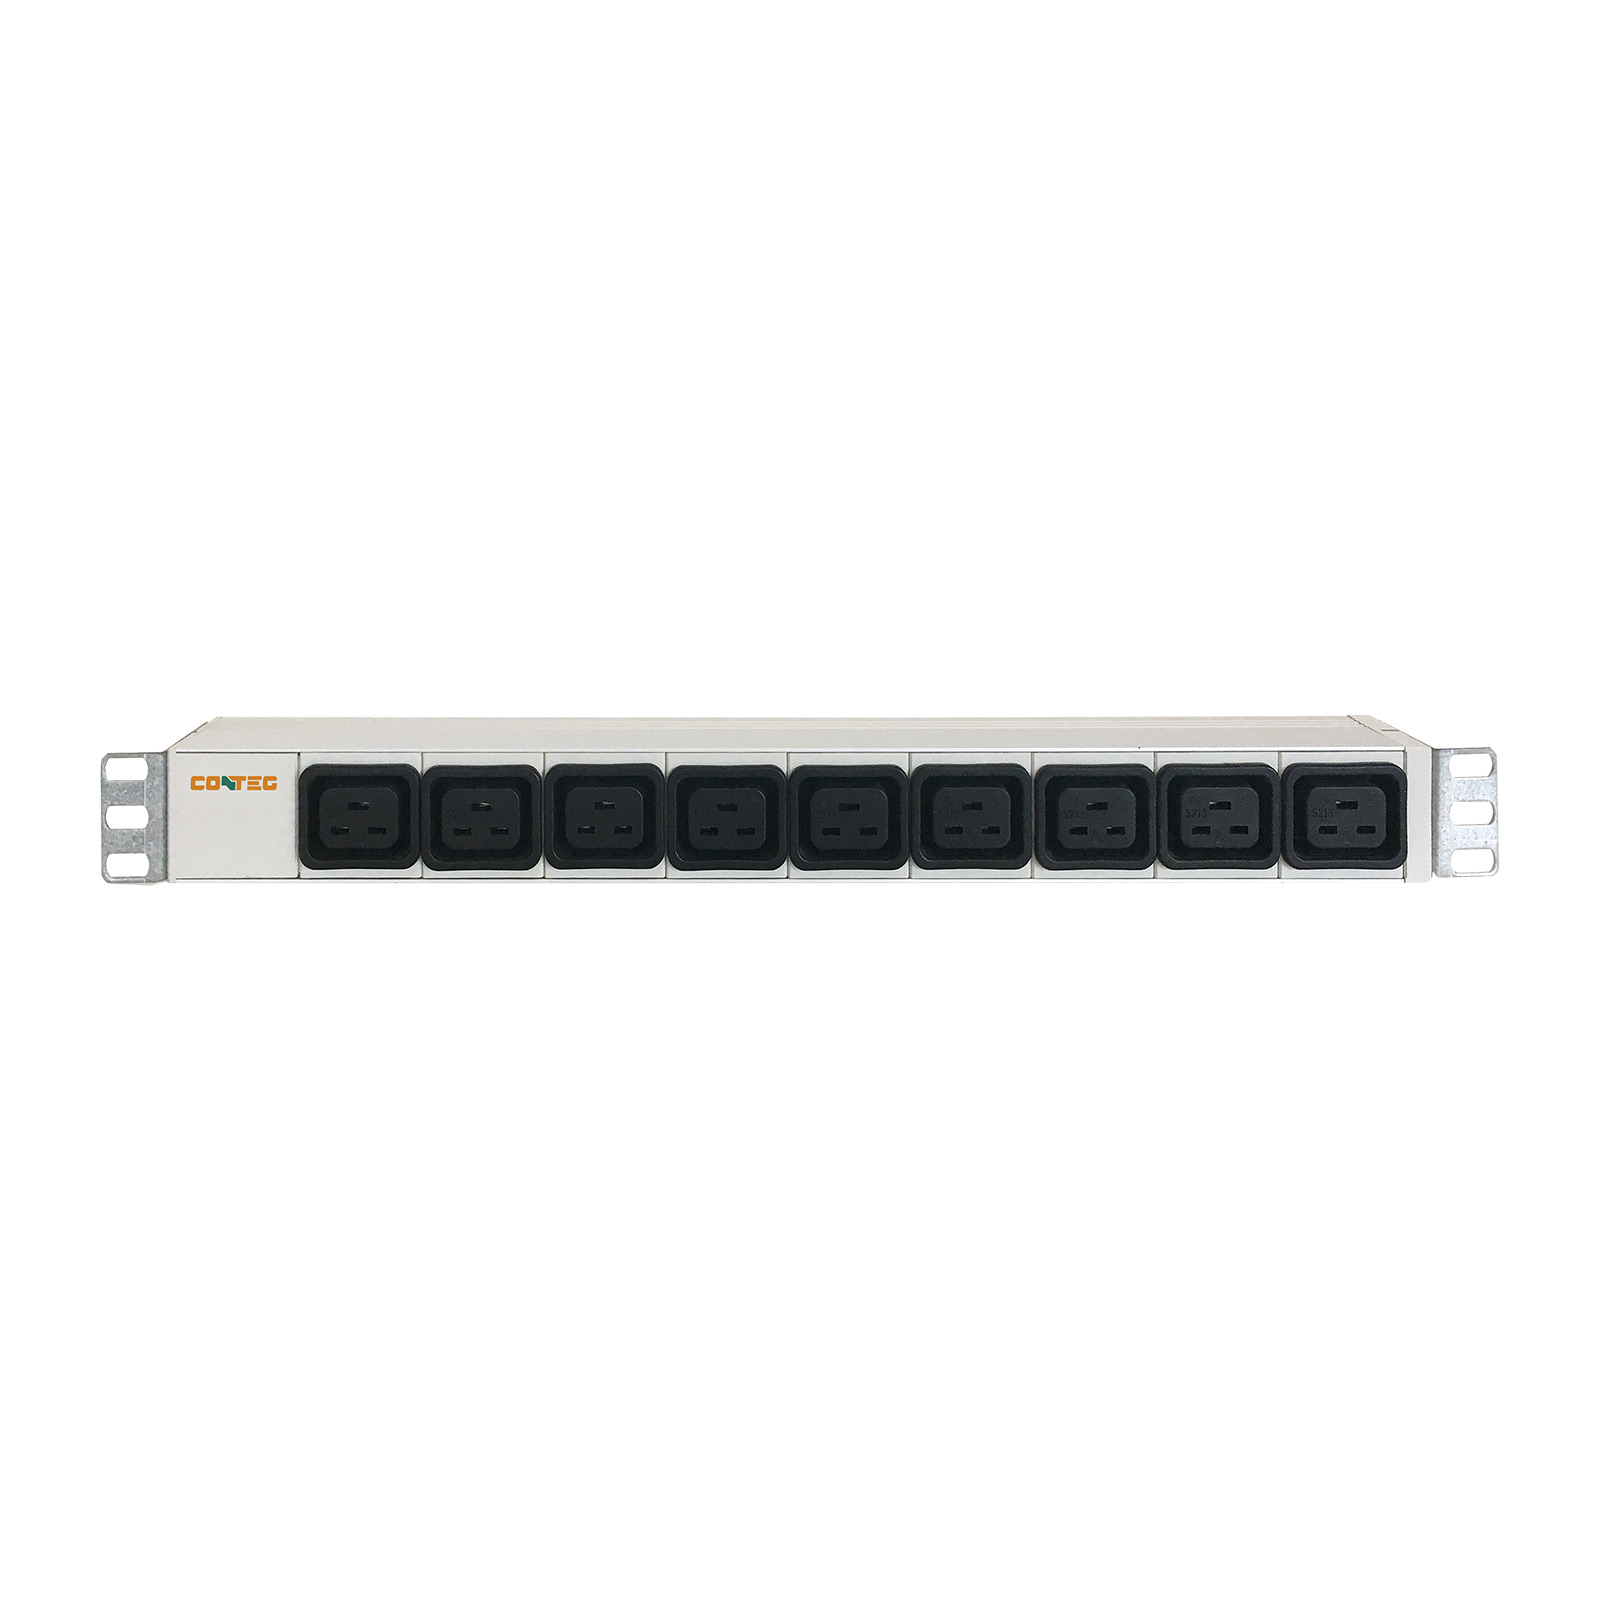 Блок розеток (PDU), кол-во розеток: 20 (20xC19), 16А, белый, кабель питания, Conteg DP-RP-20-IECC19 (DP-RP-20-IECC19)